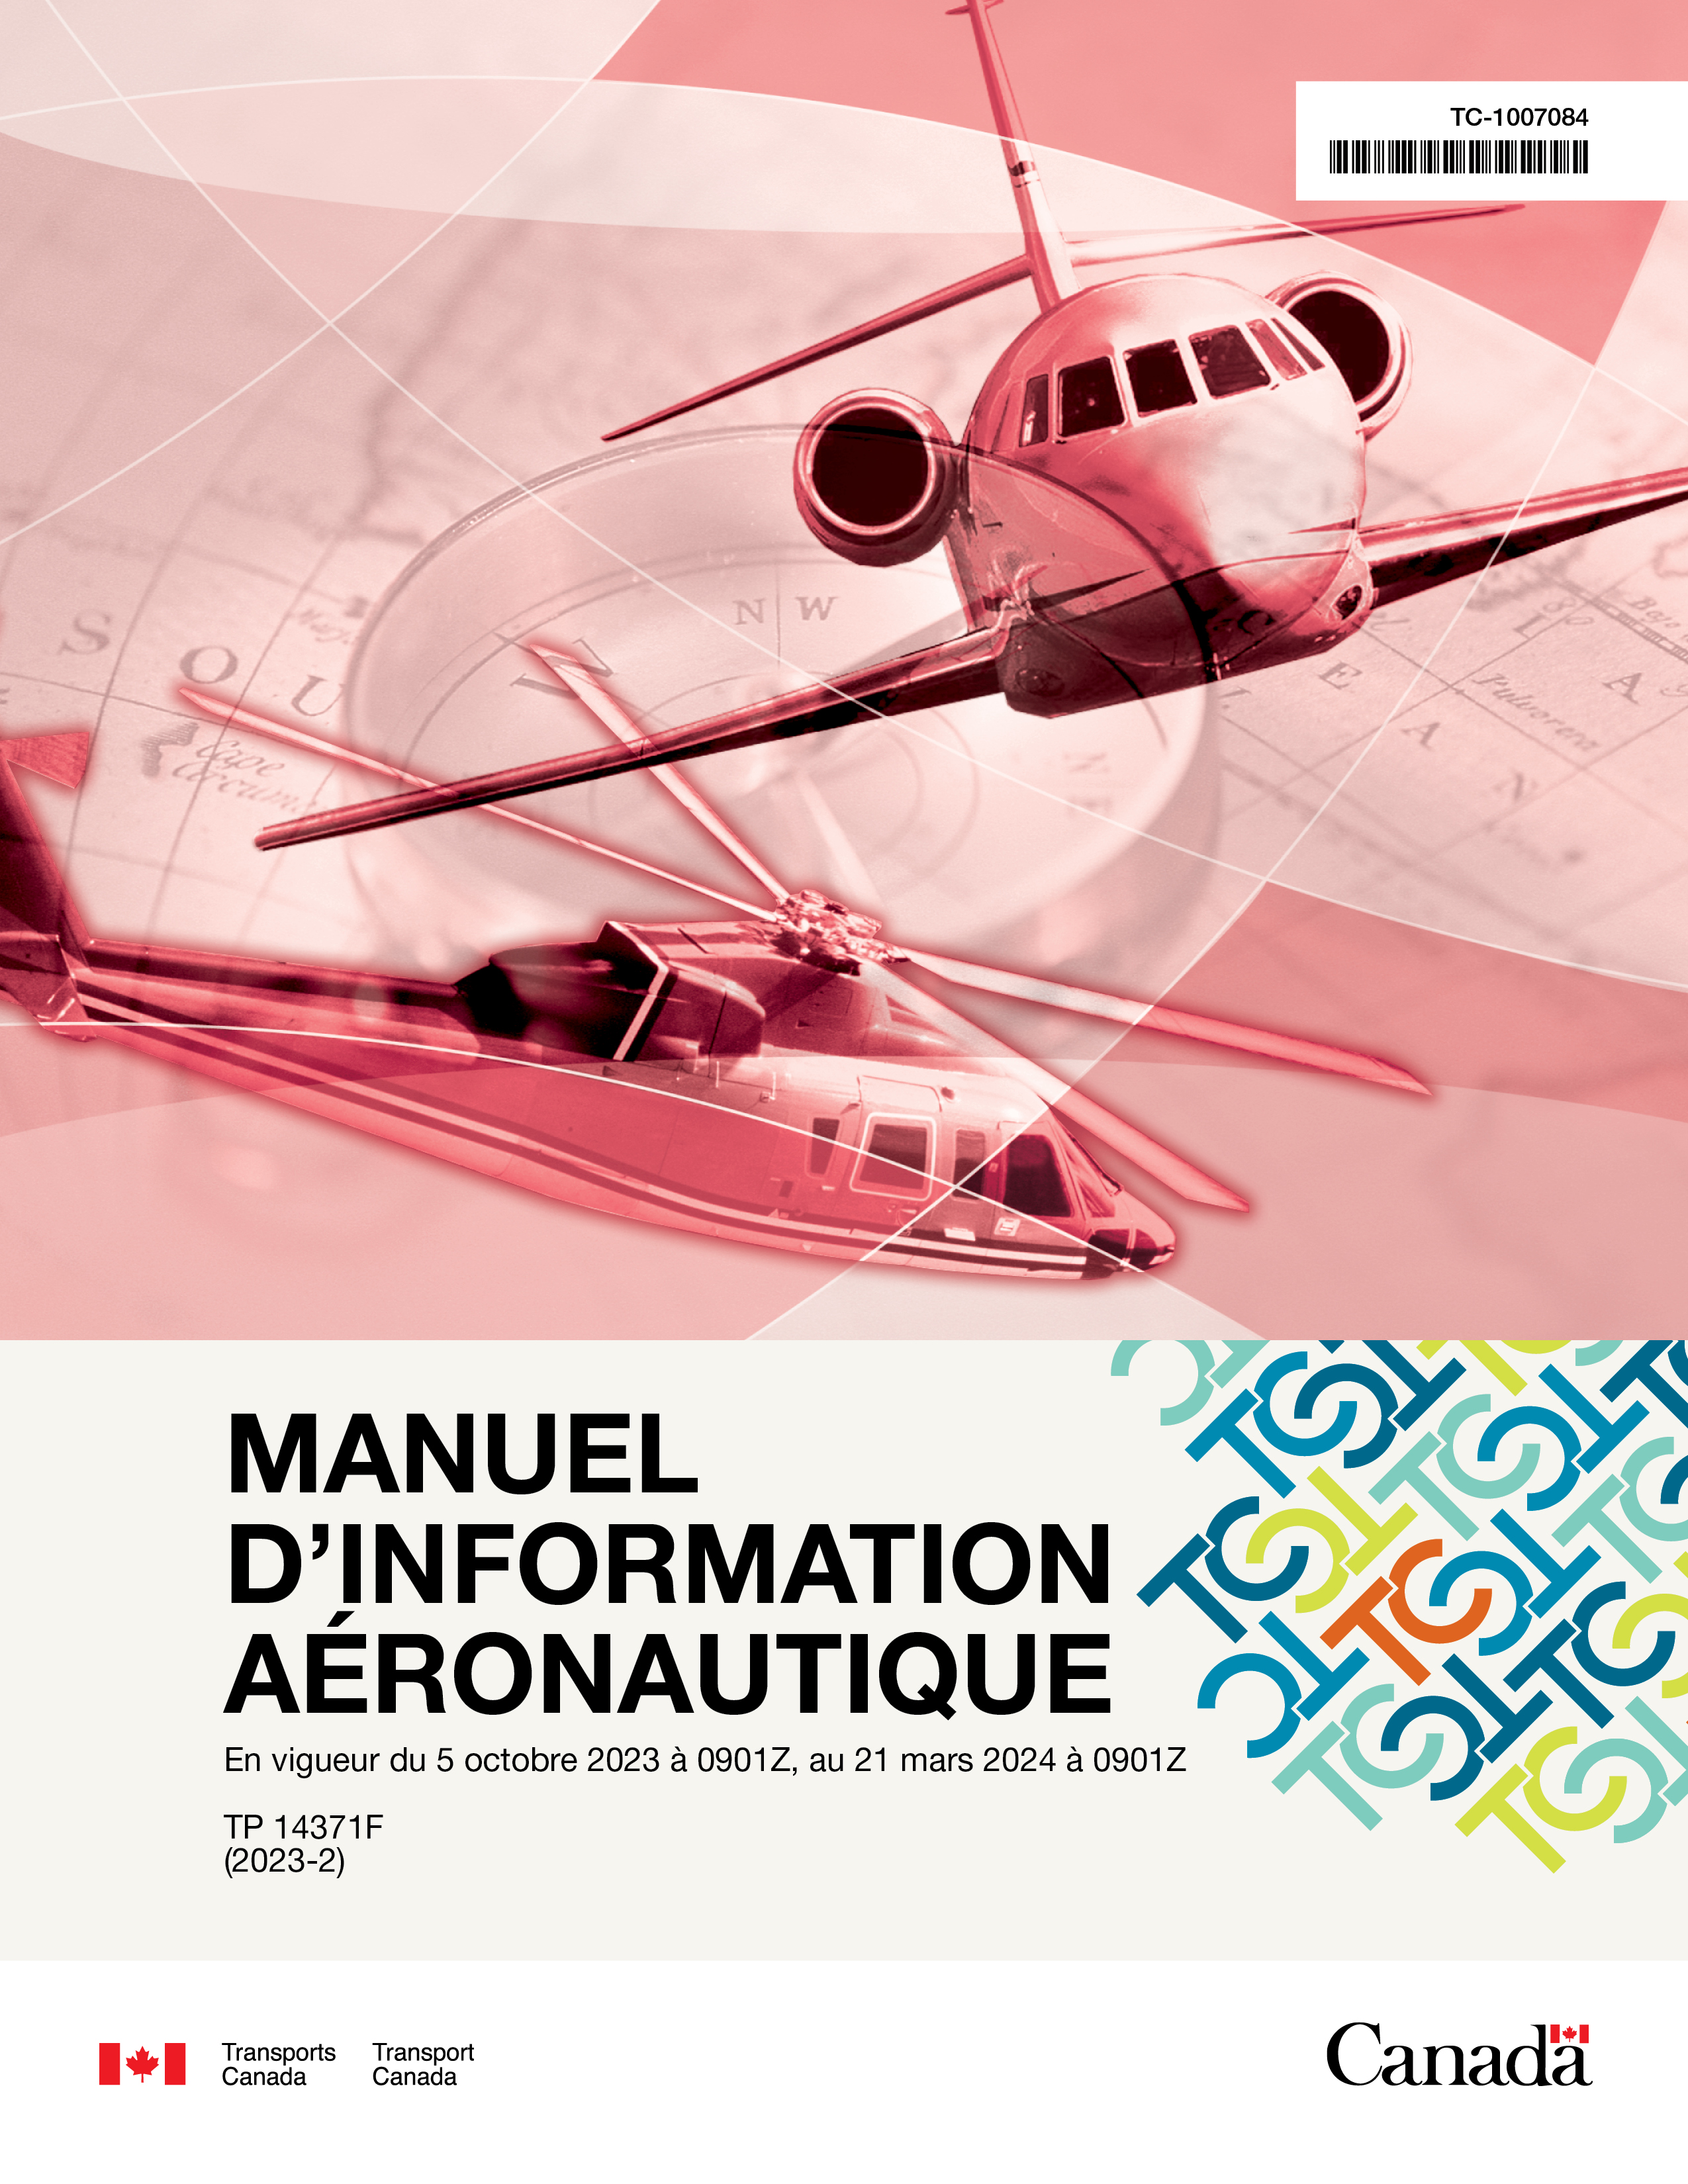 Manuel d’information aéronautique de Transports Canada